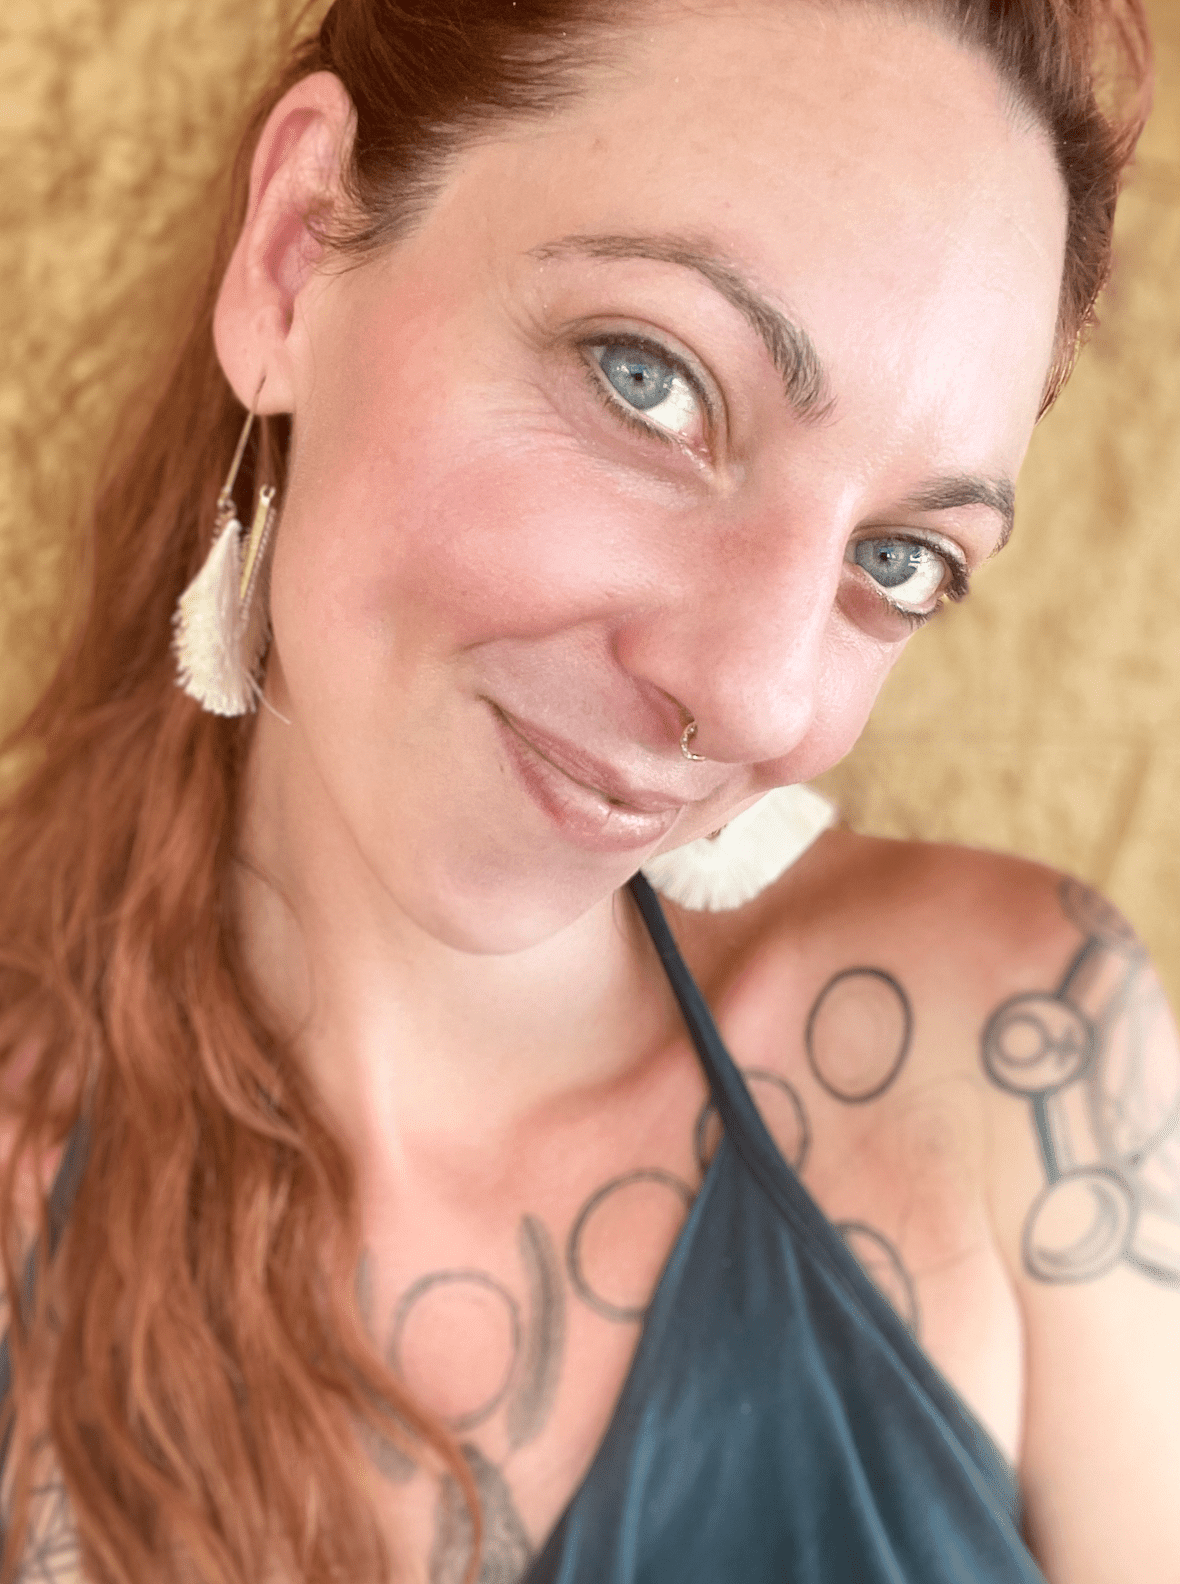 Tantric Erotic Healer | Ashland, OR. Kauai, HI. Denver, CO | Paris Rose